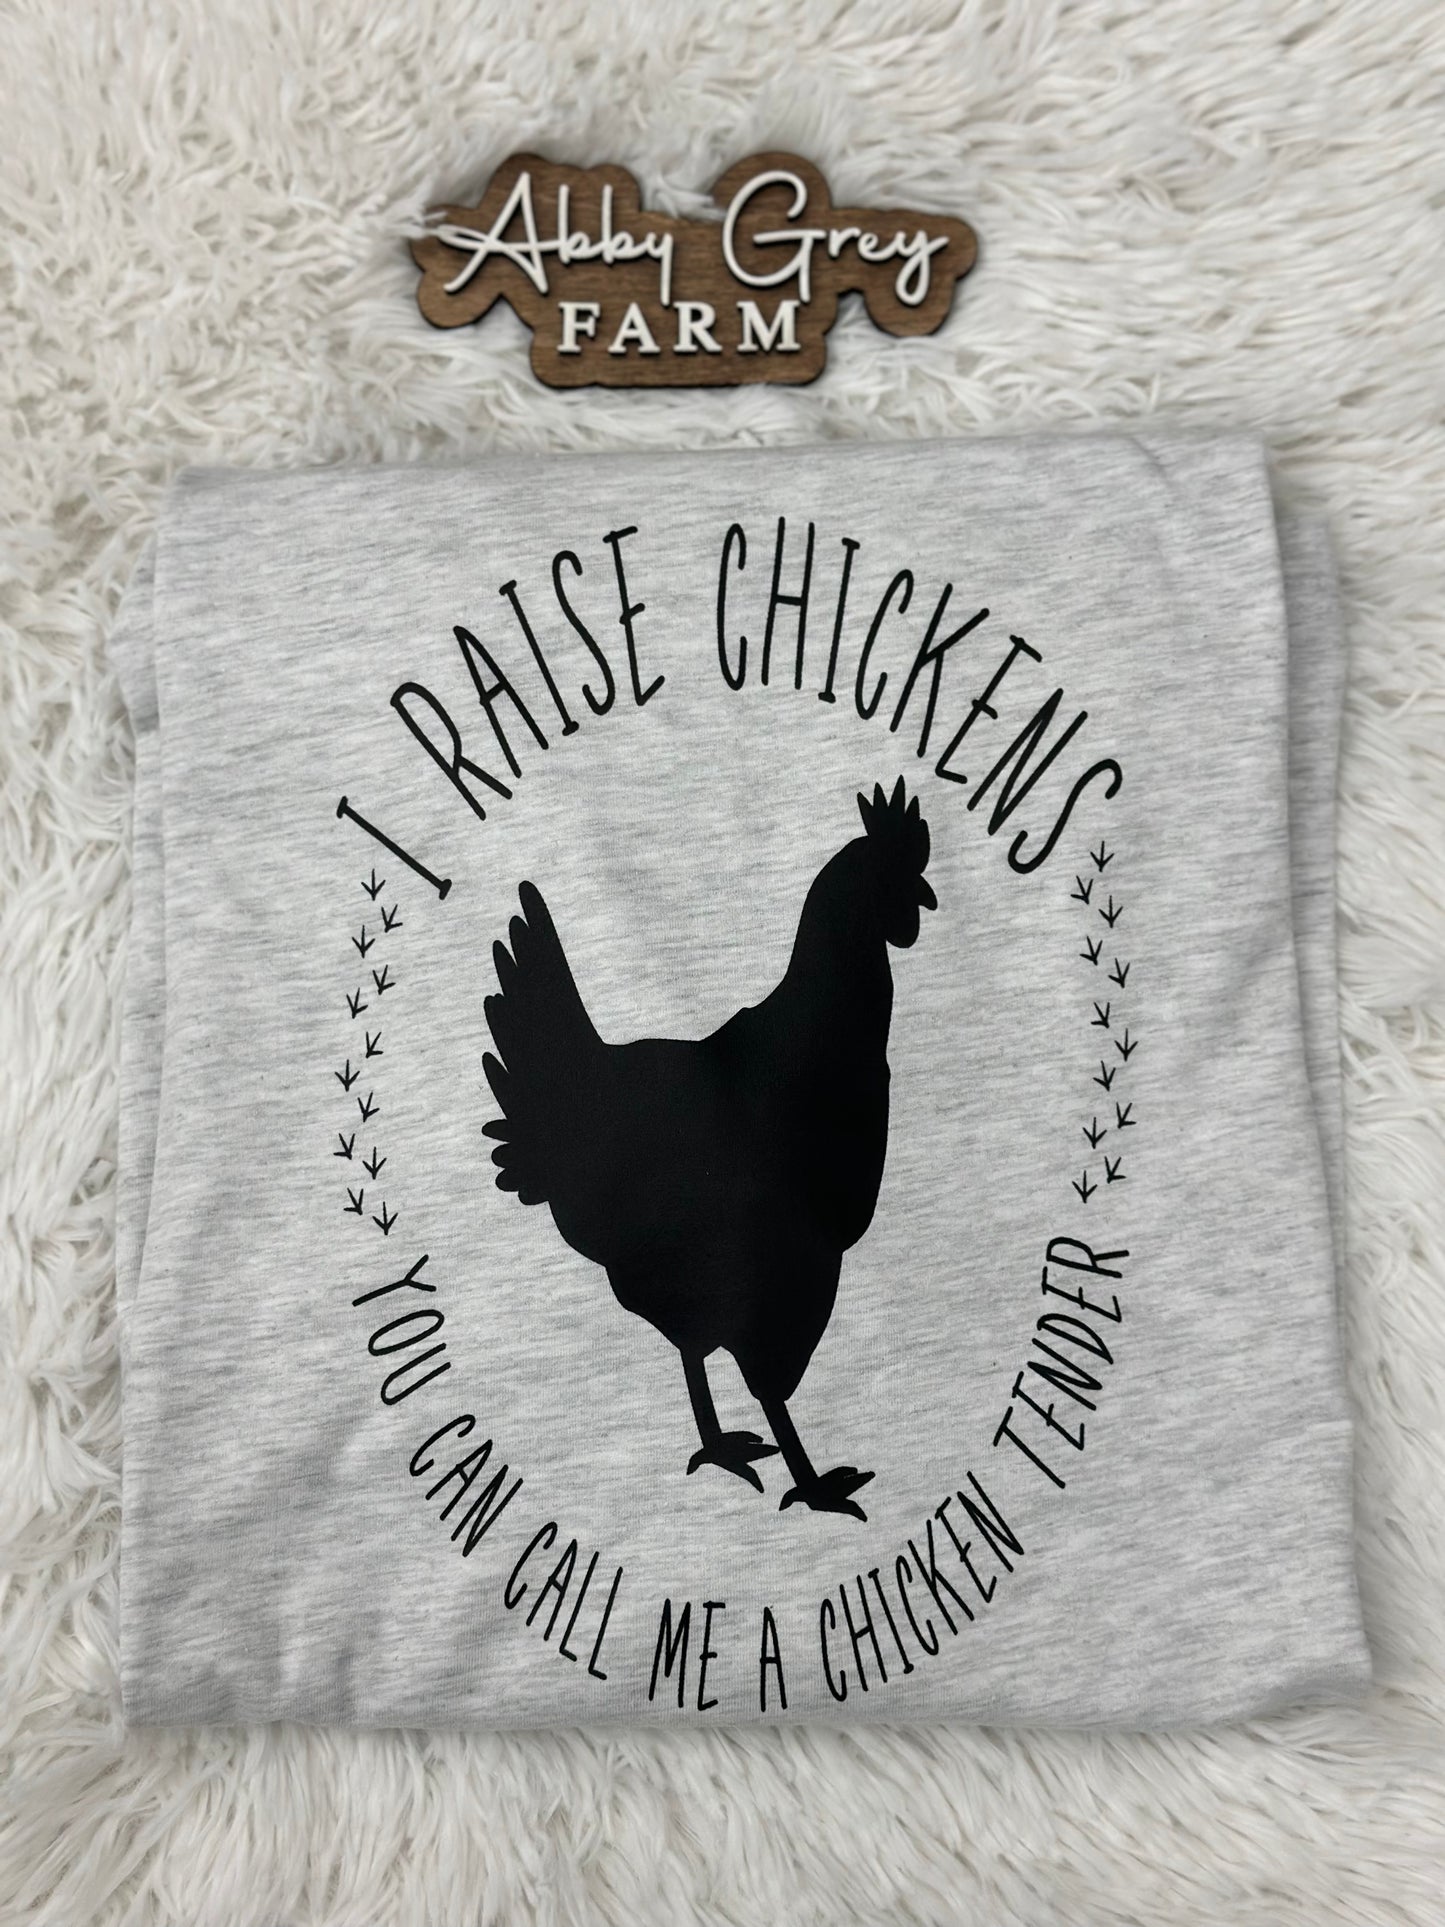 I raise chickens Graphic Tee